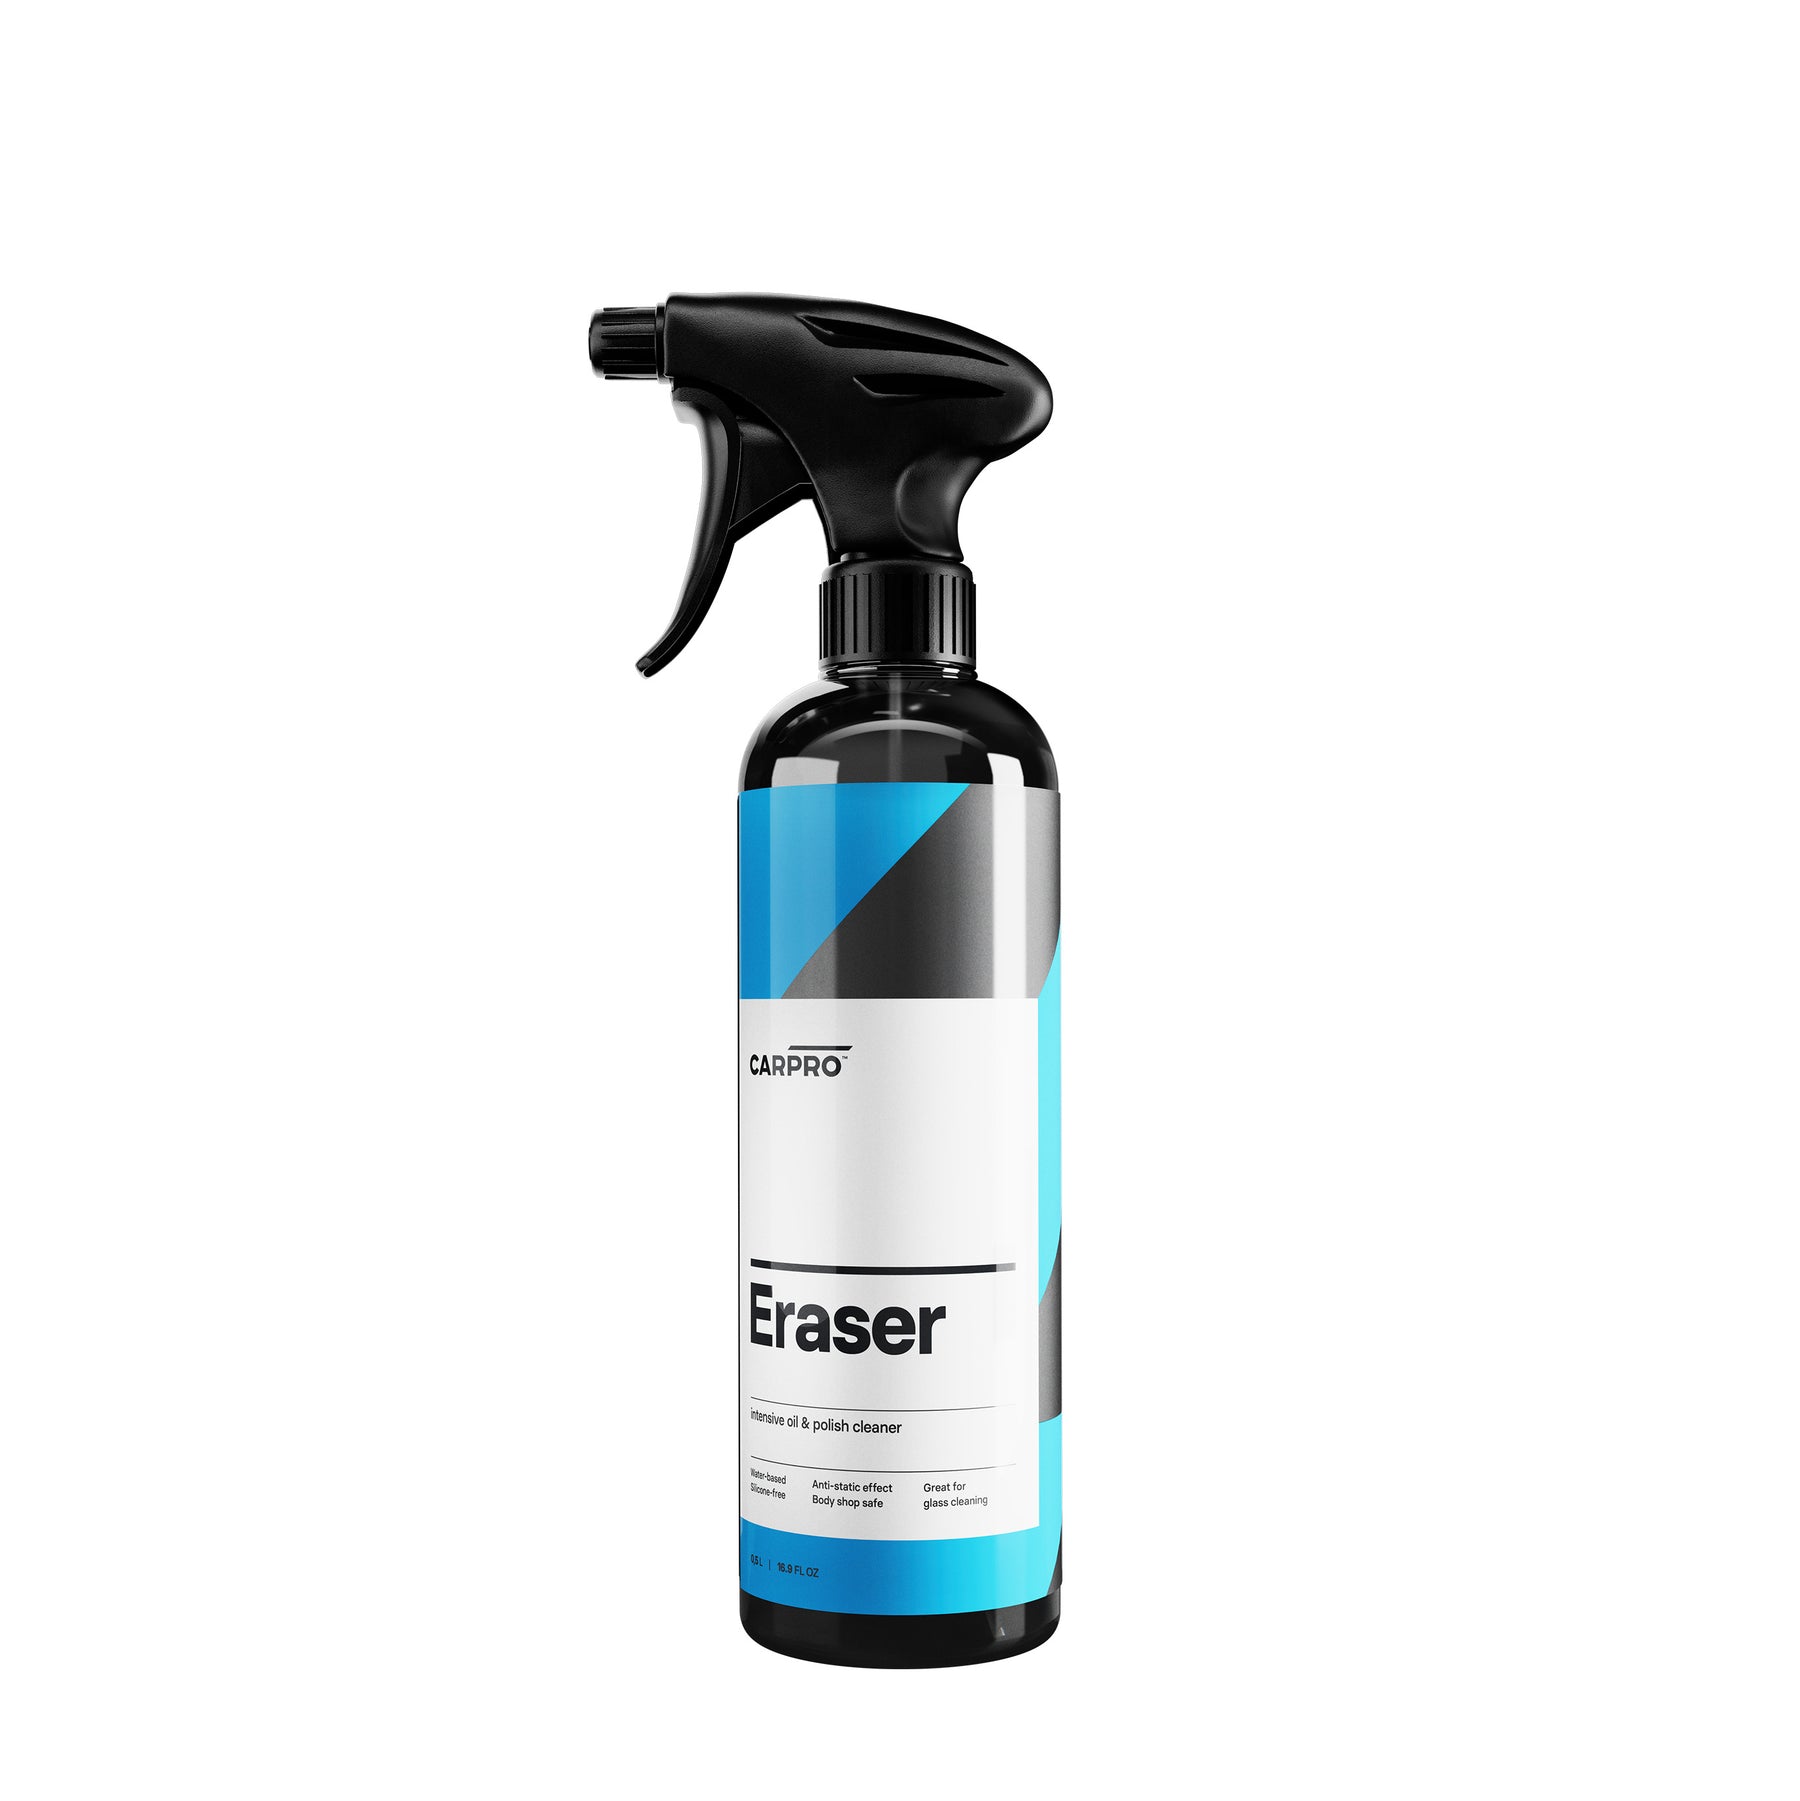 Flacone spray di CarPro Eraser, detergente per superfici auto